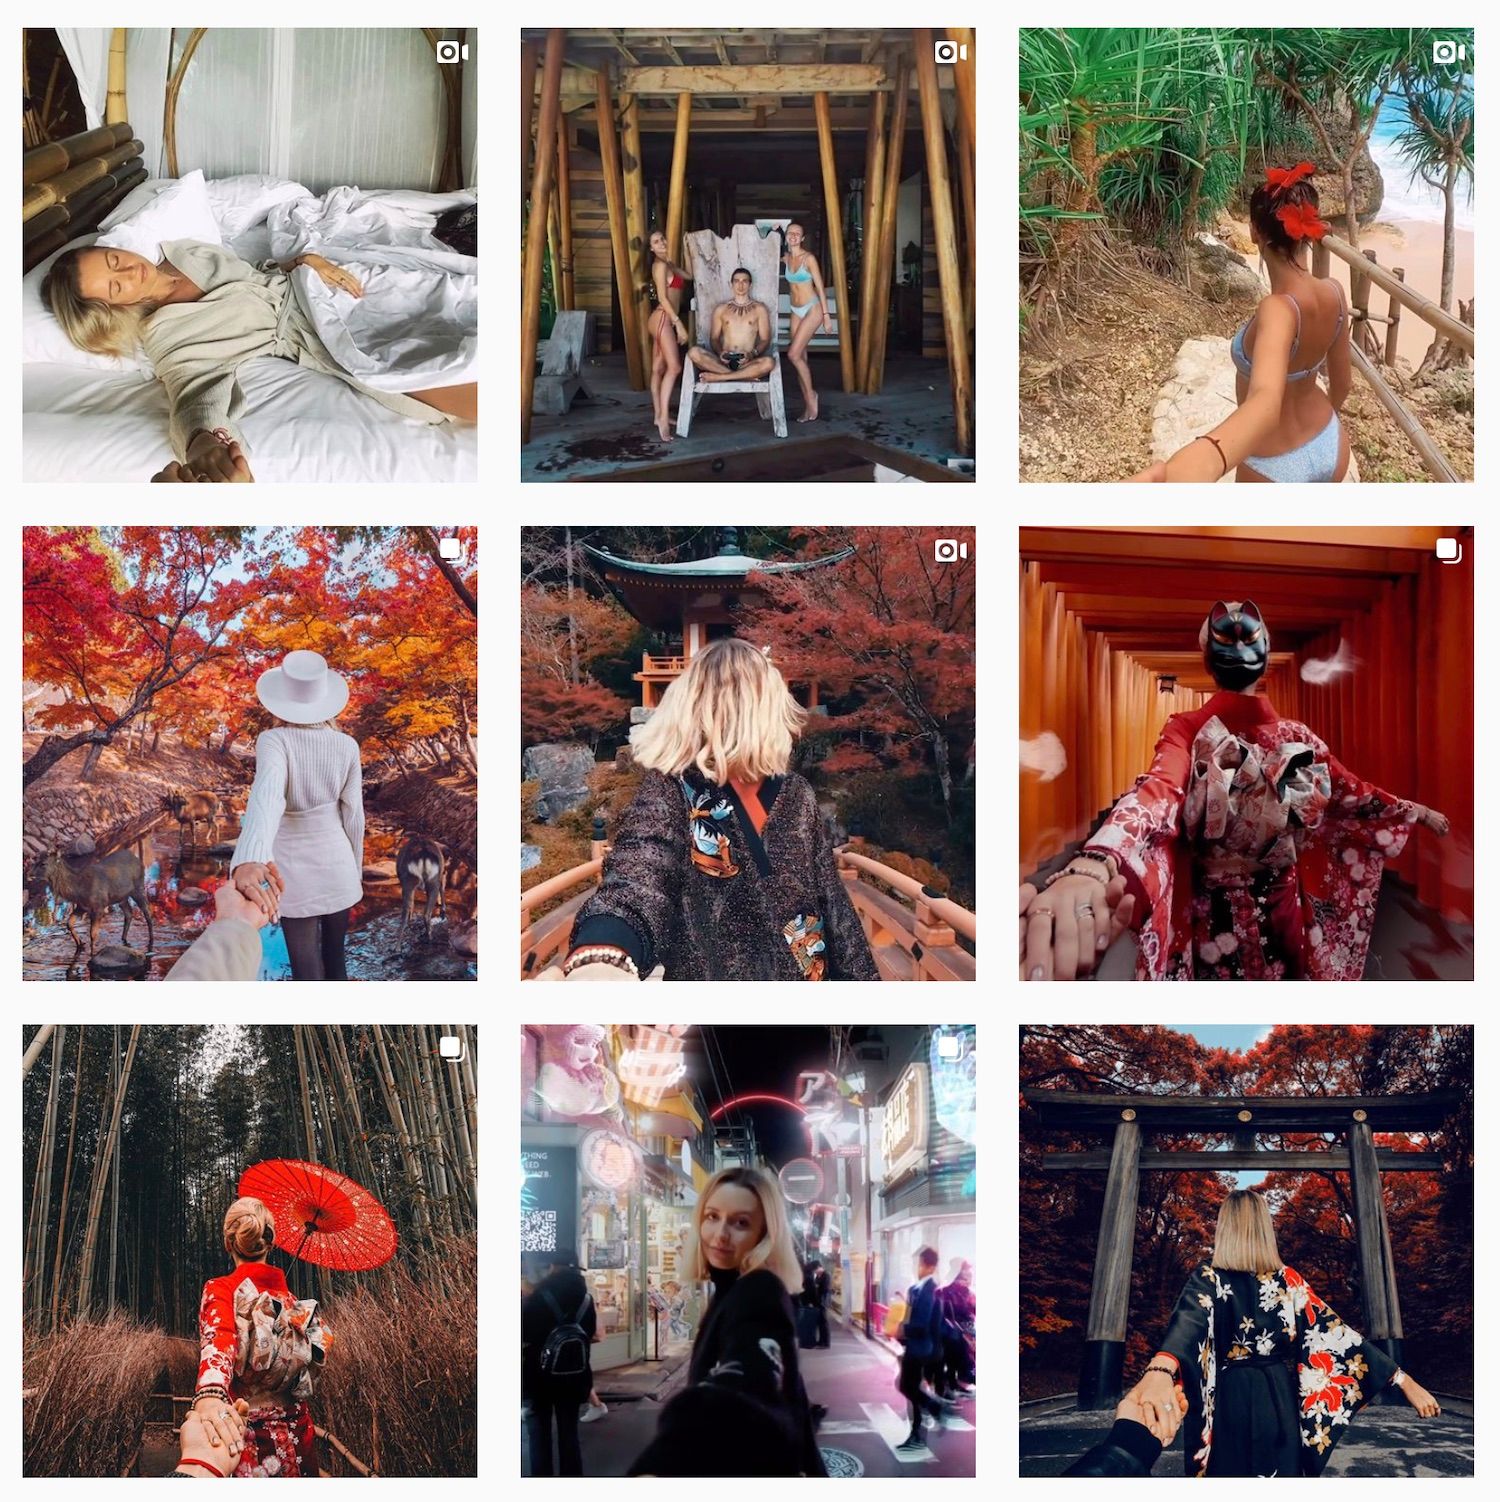 MURAD OSMANN's 'Follow Me' series on Instagram. 